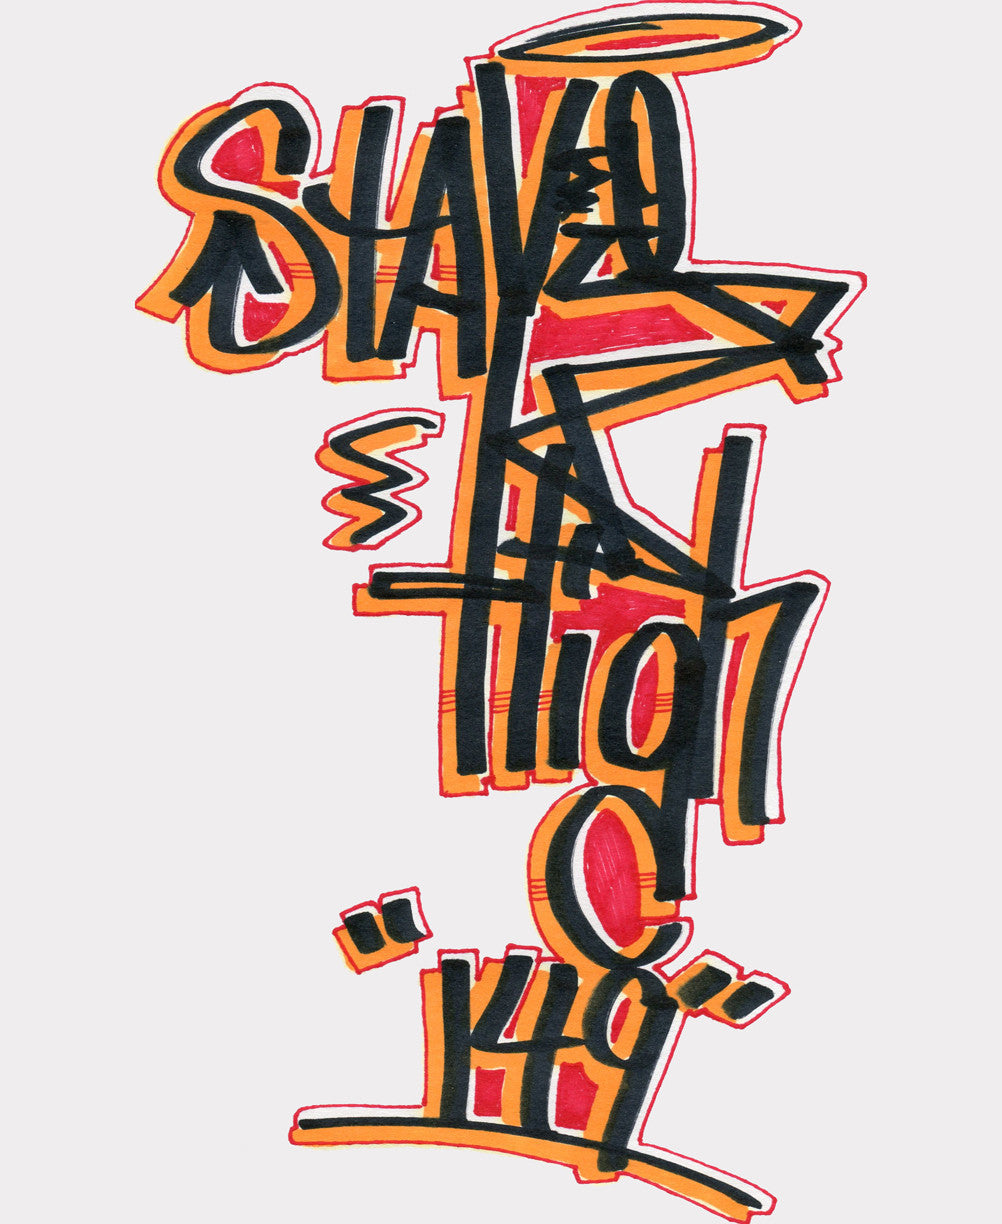 STAYHIGH 149 - "StayHigh" Black Book Drawing 4